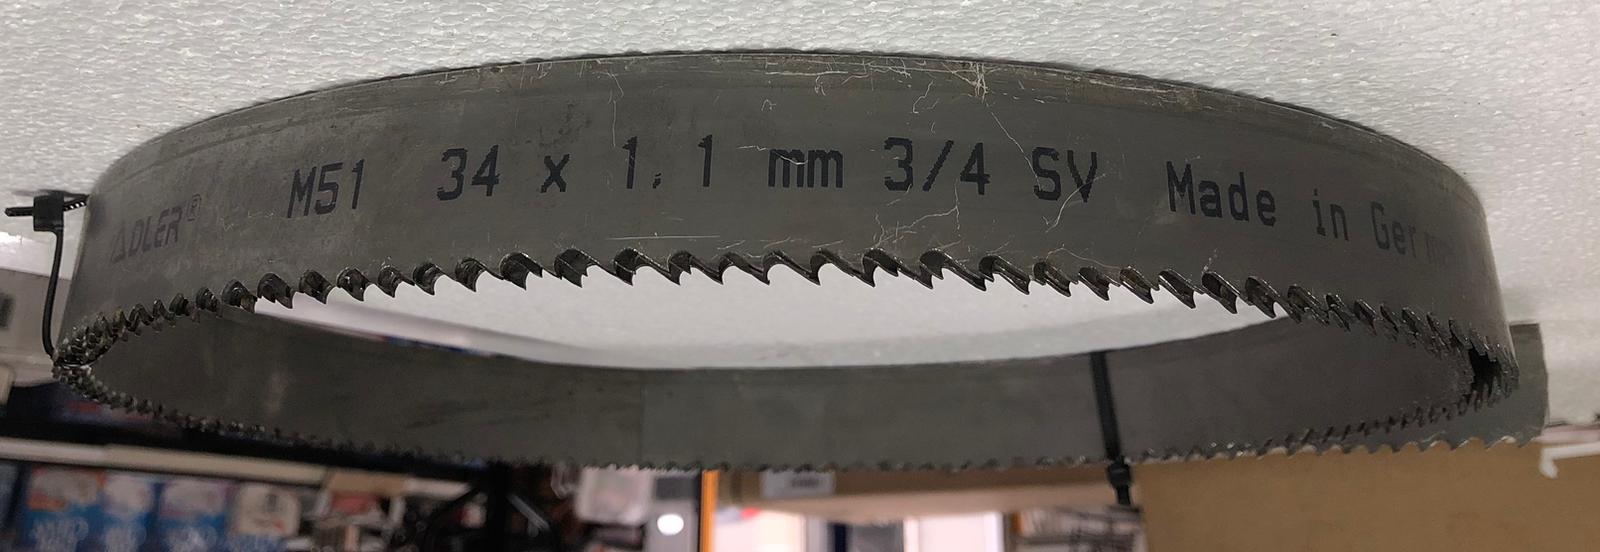 Adler Bi Metal M51-34X1,1 Mm-3/4 Diş Sv Şerit Testere